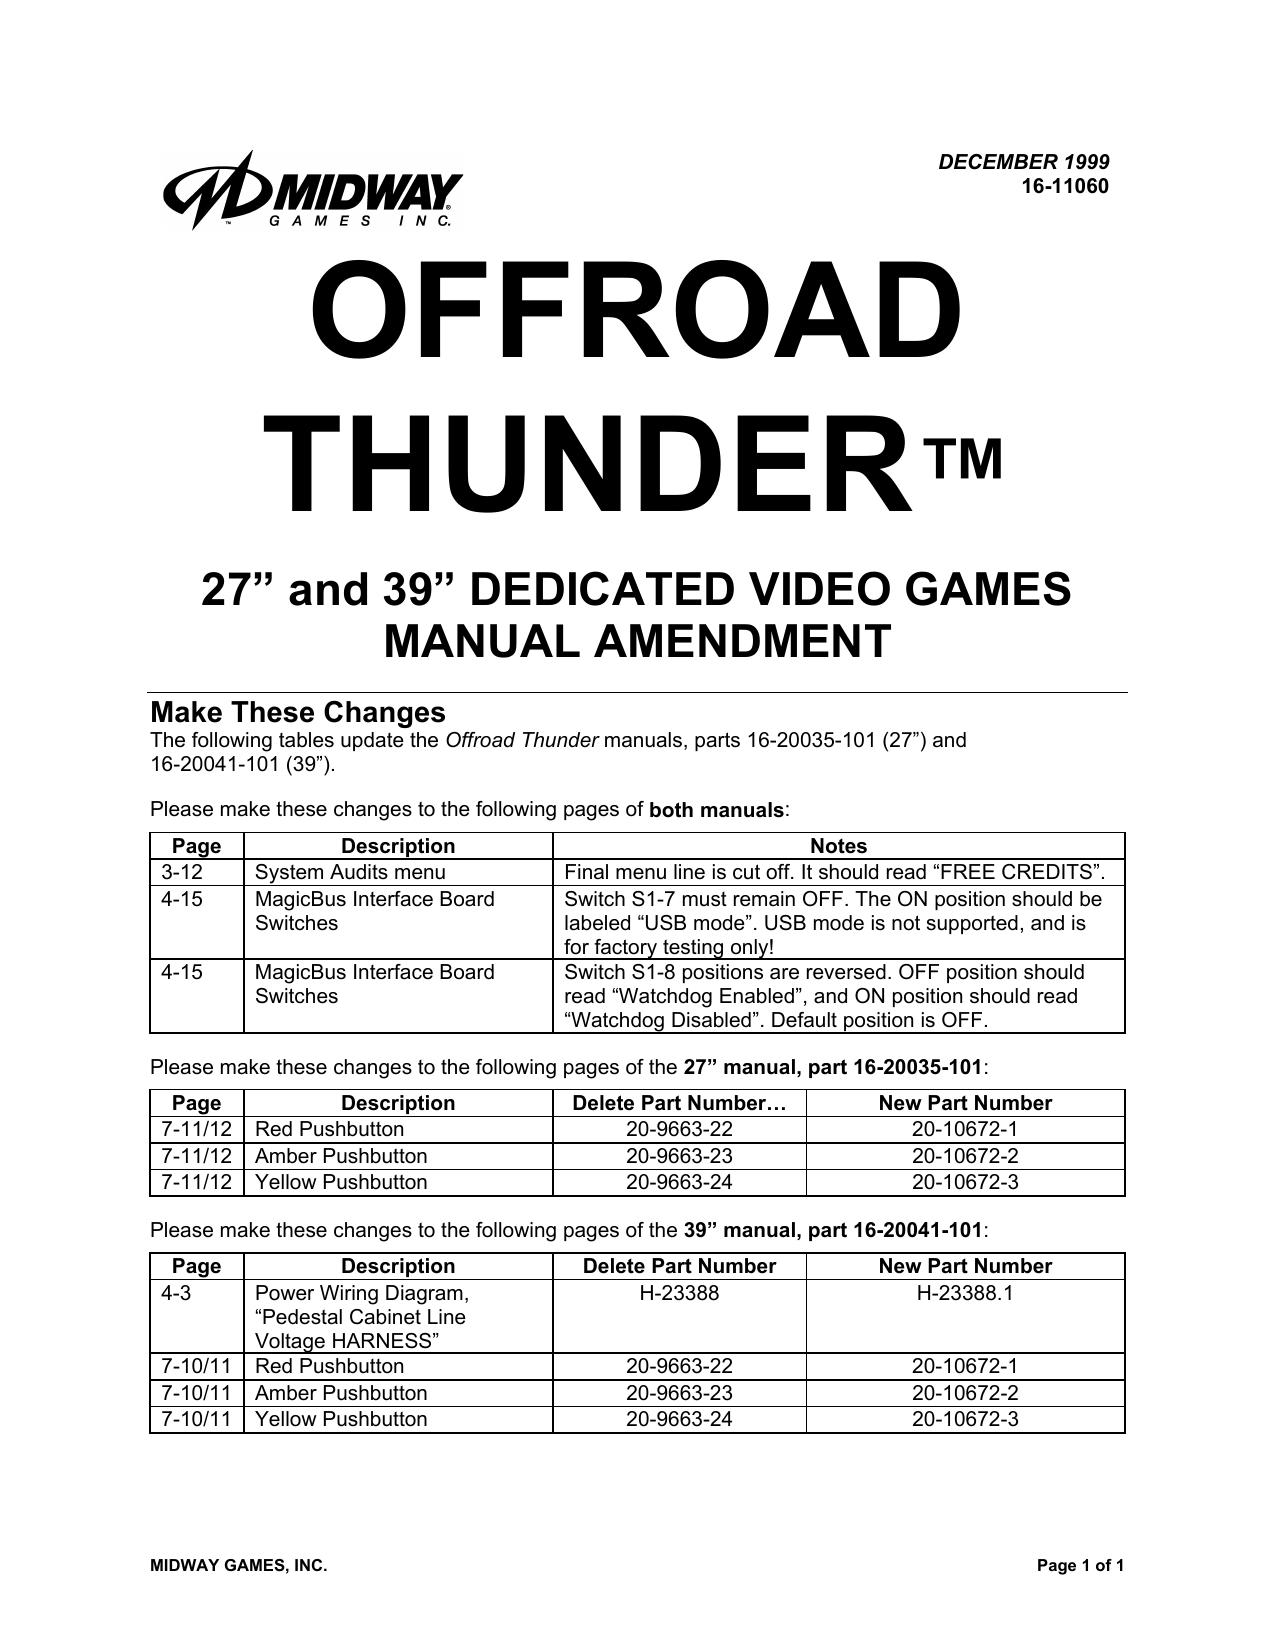 Offroad Thunder amendment (general)